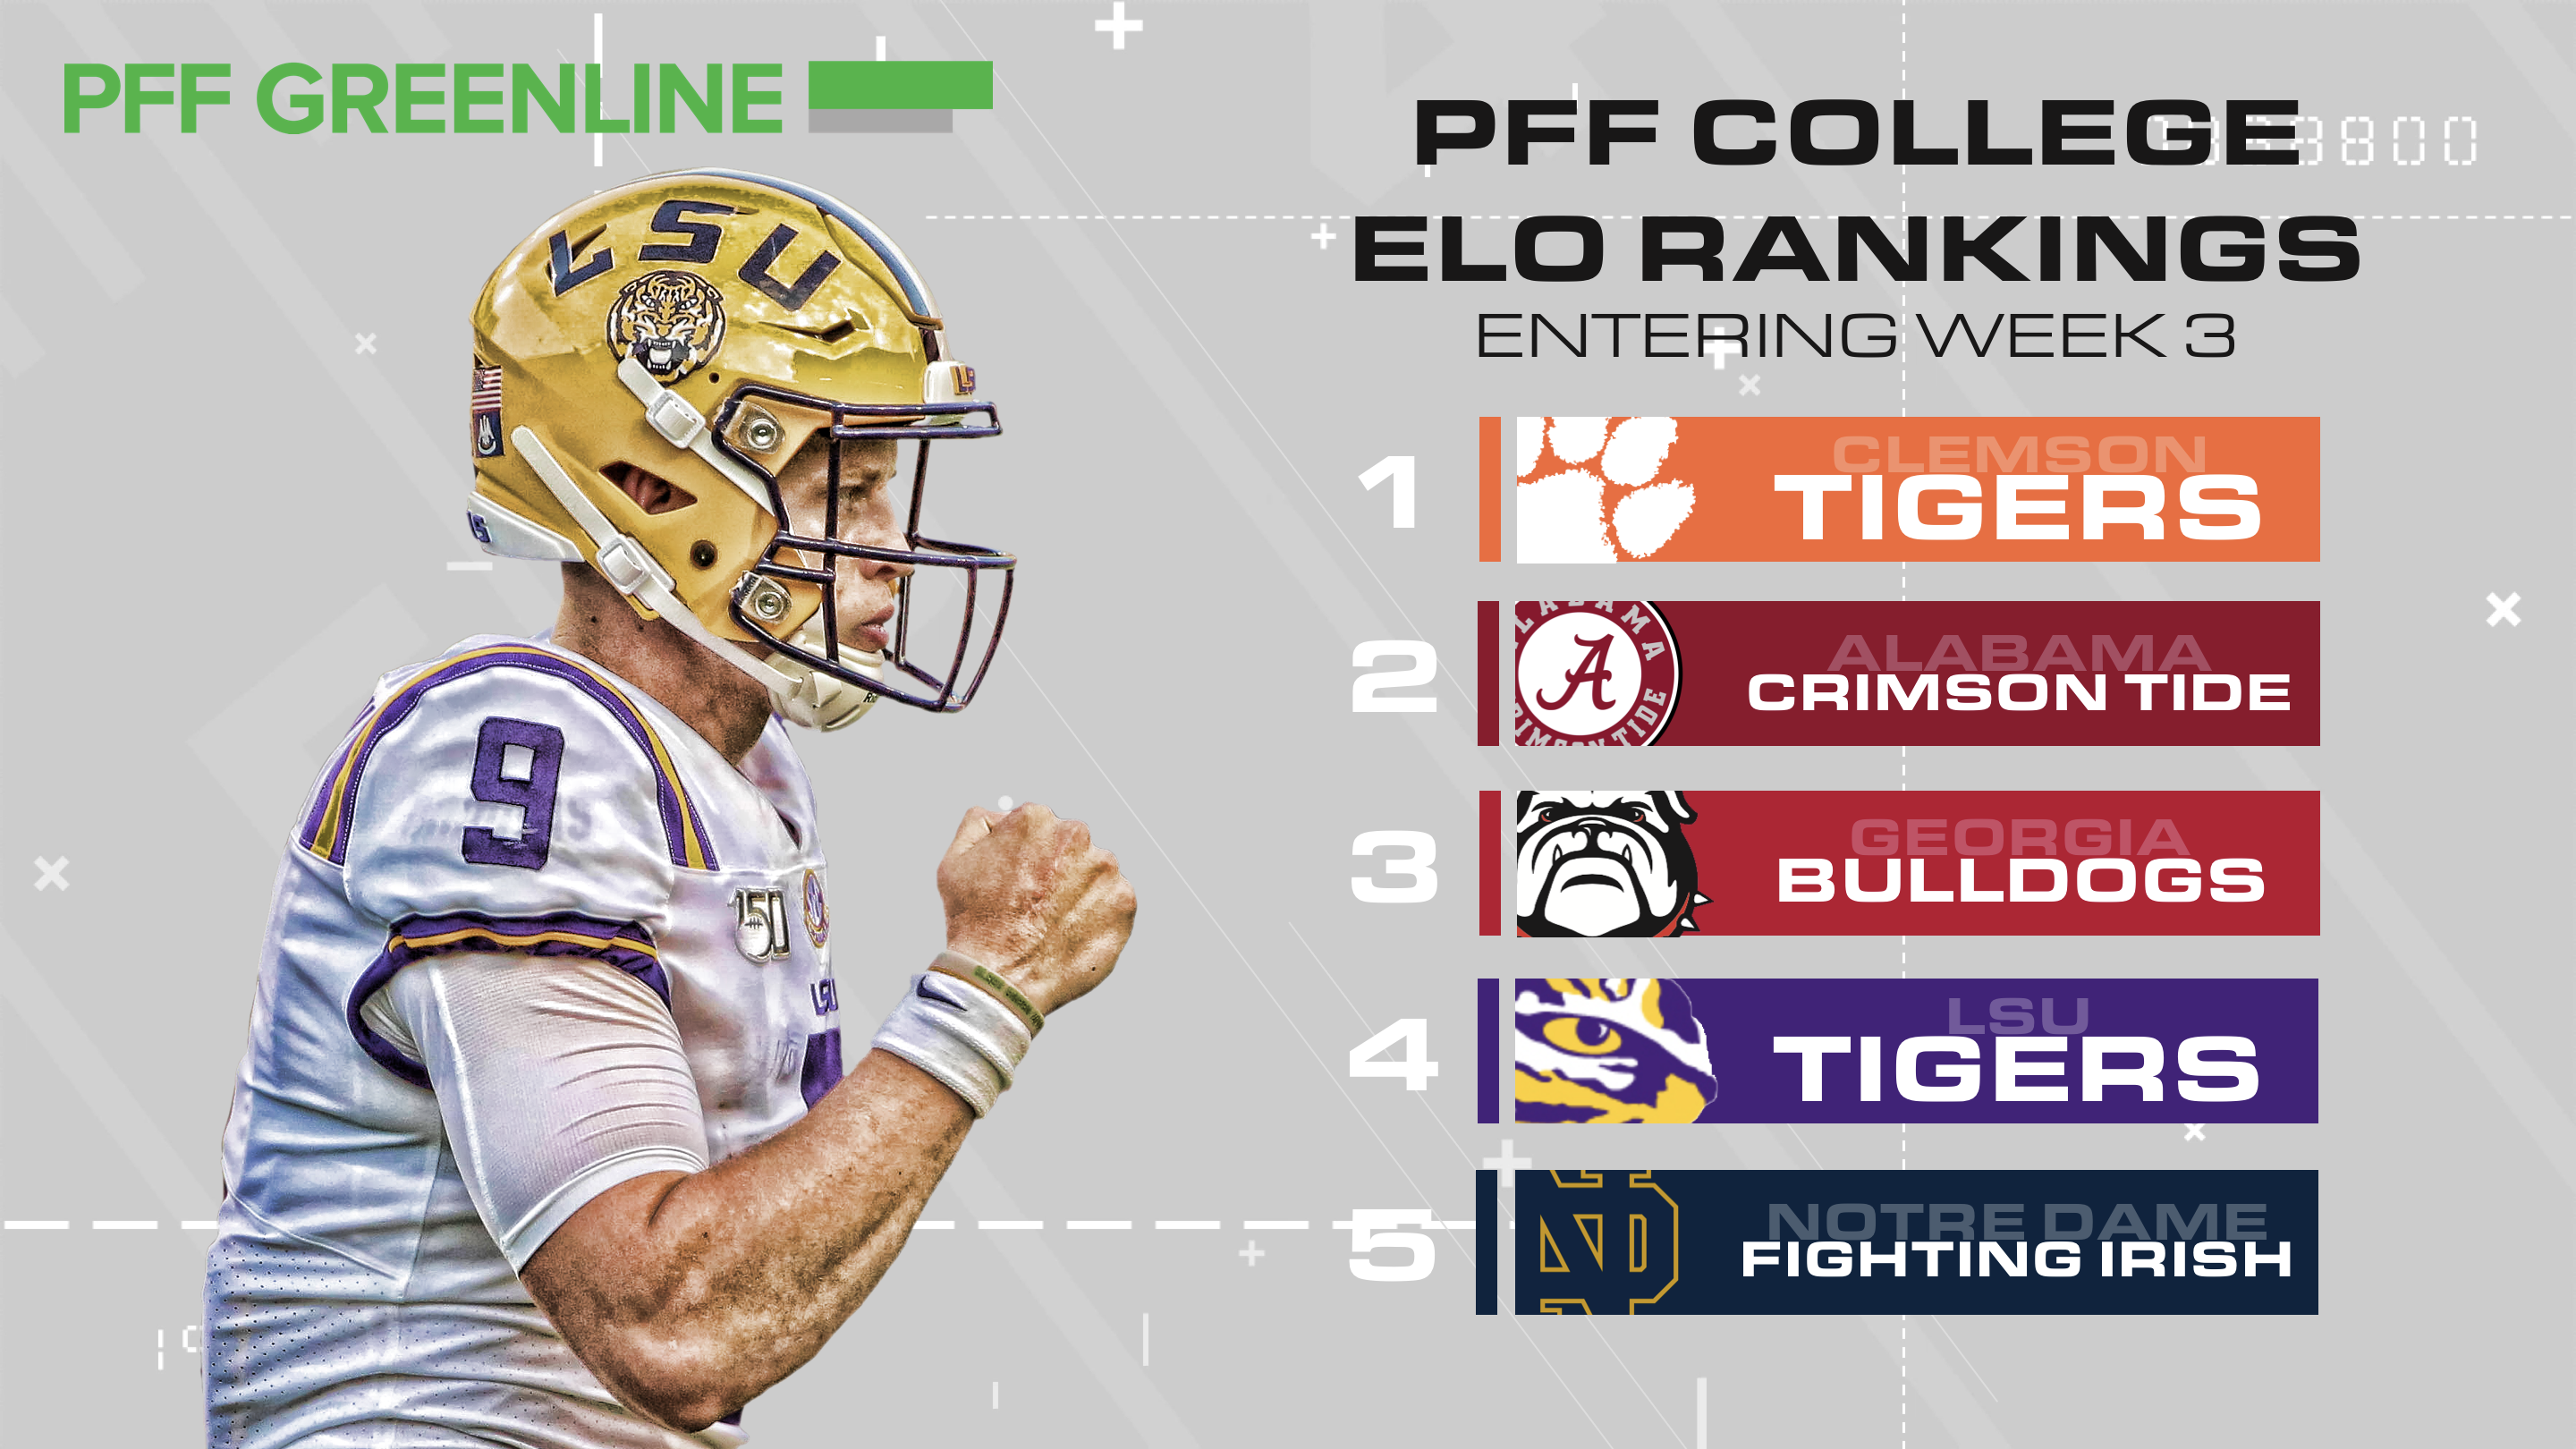 PFF Top 25 College Football Power Rankings following Week 2